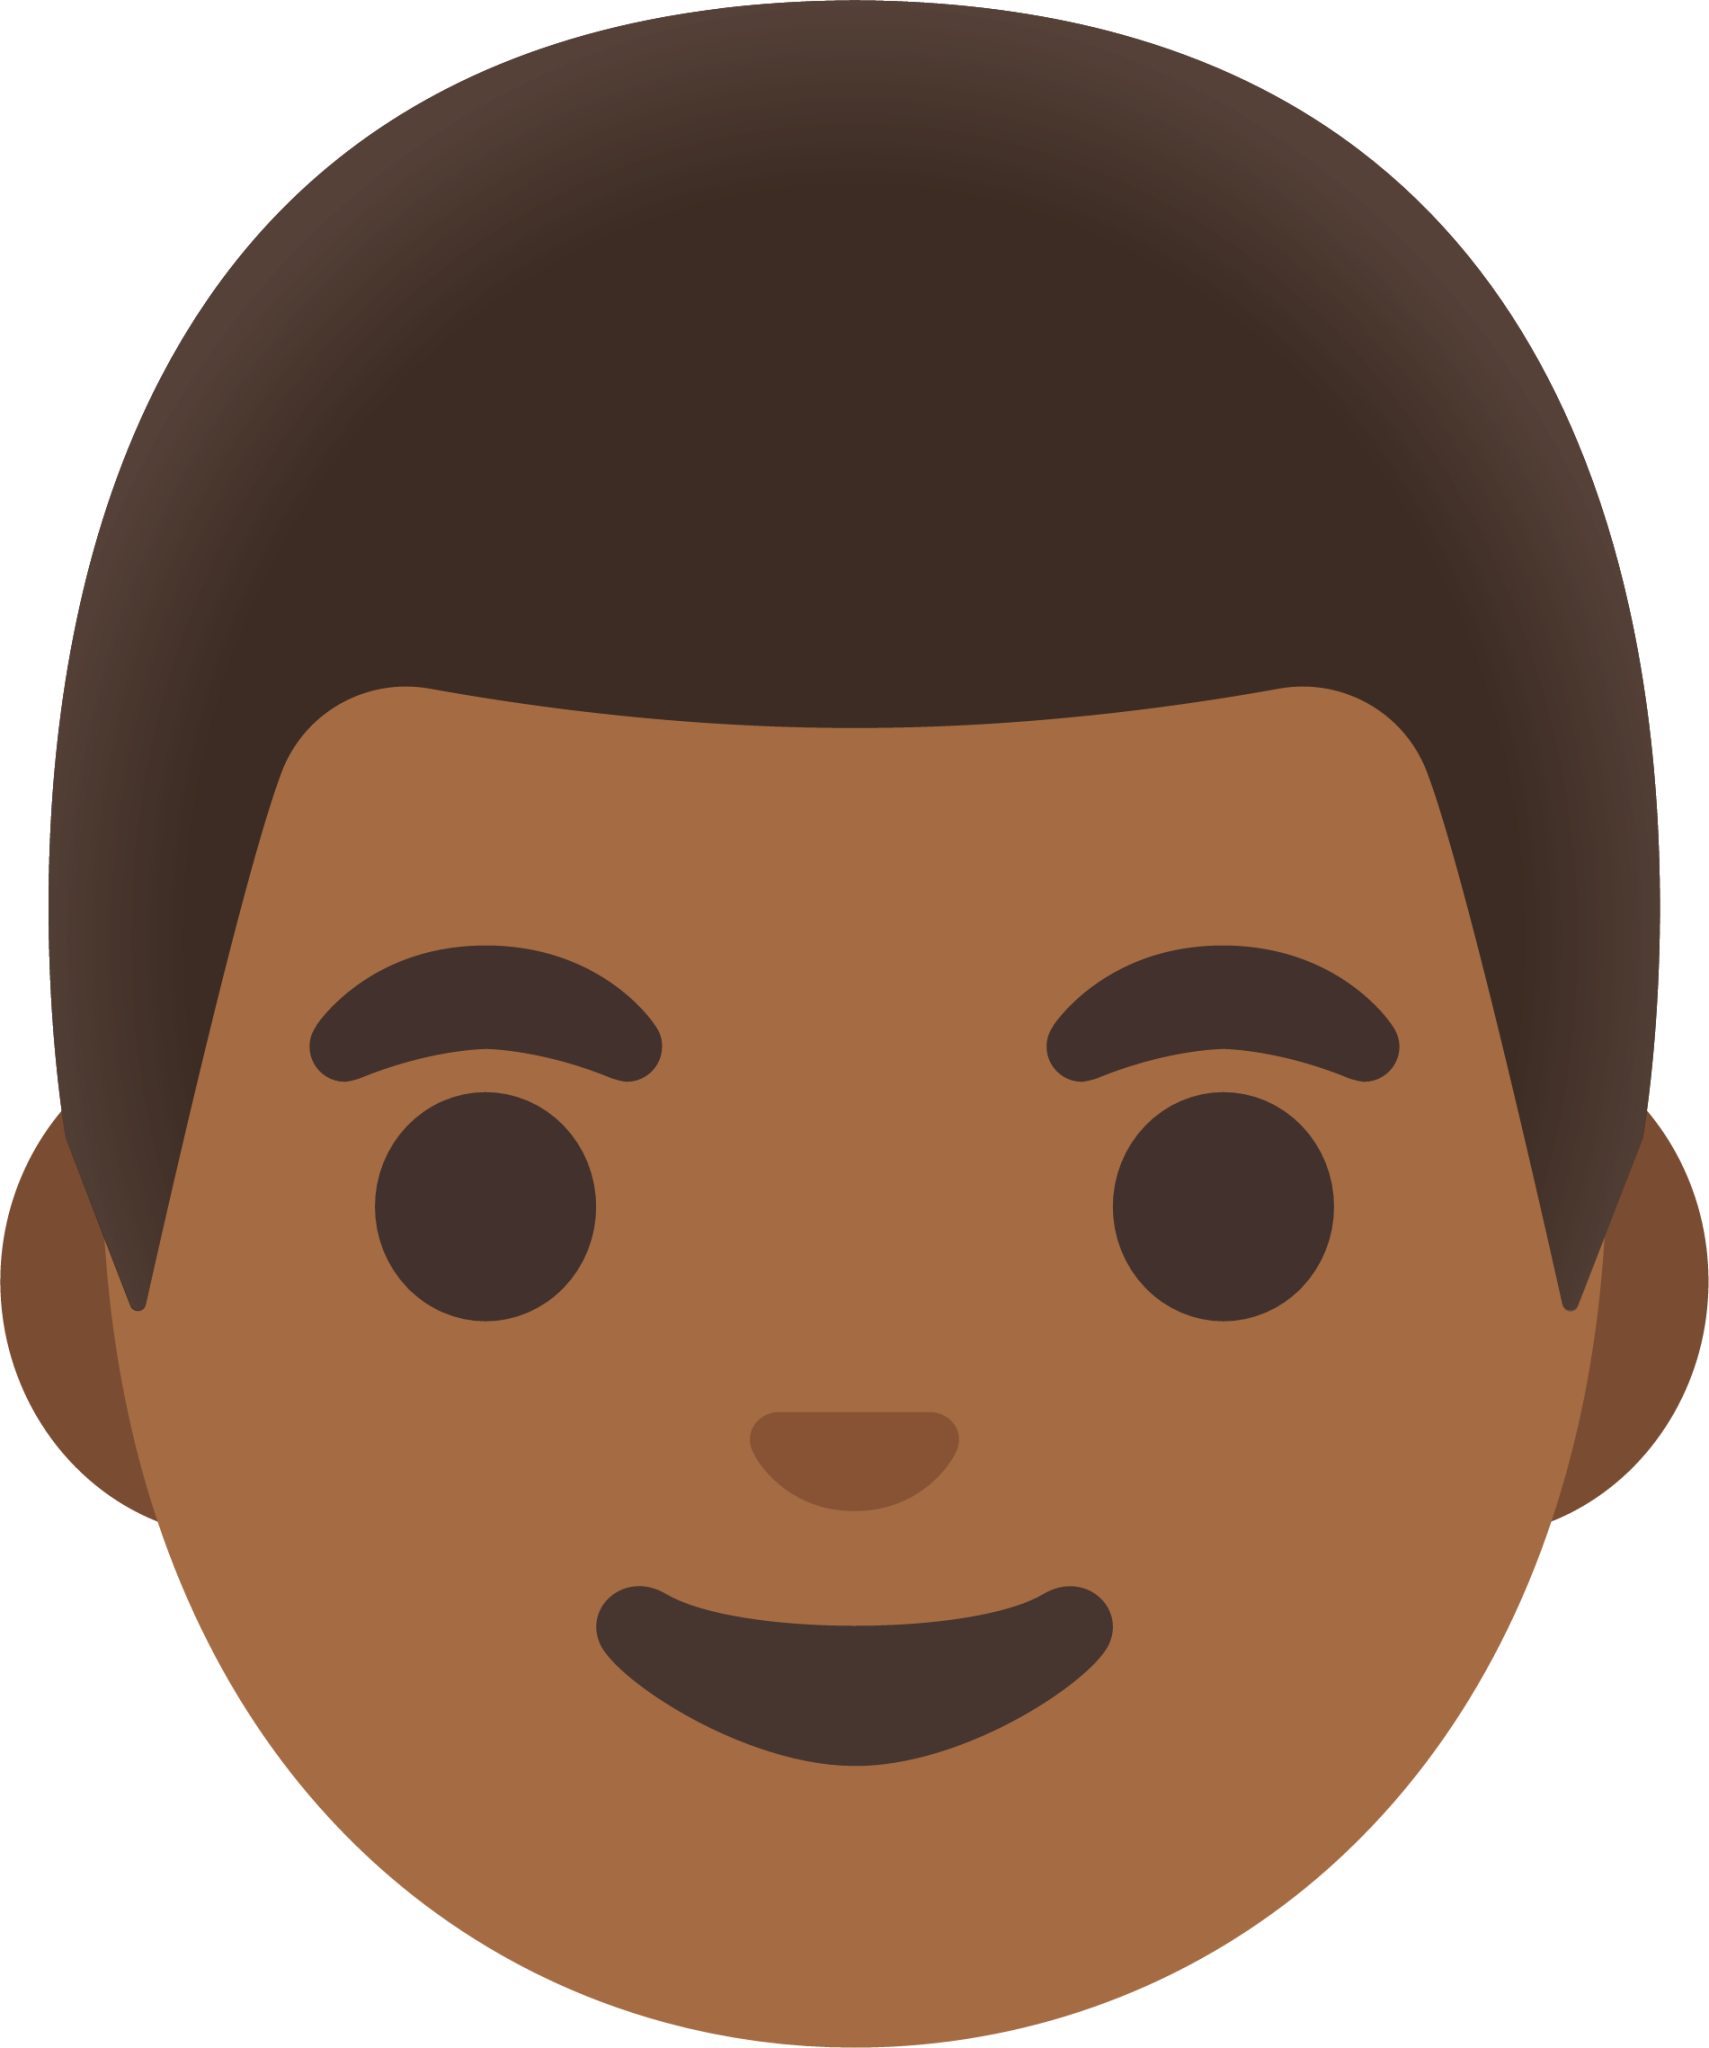 man: medium-dark skin tone emoji